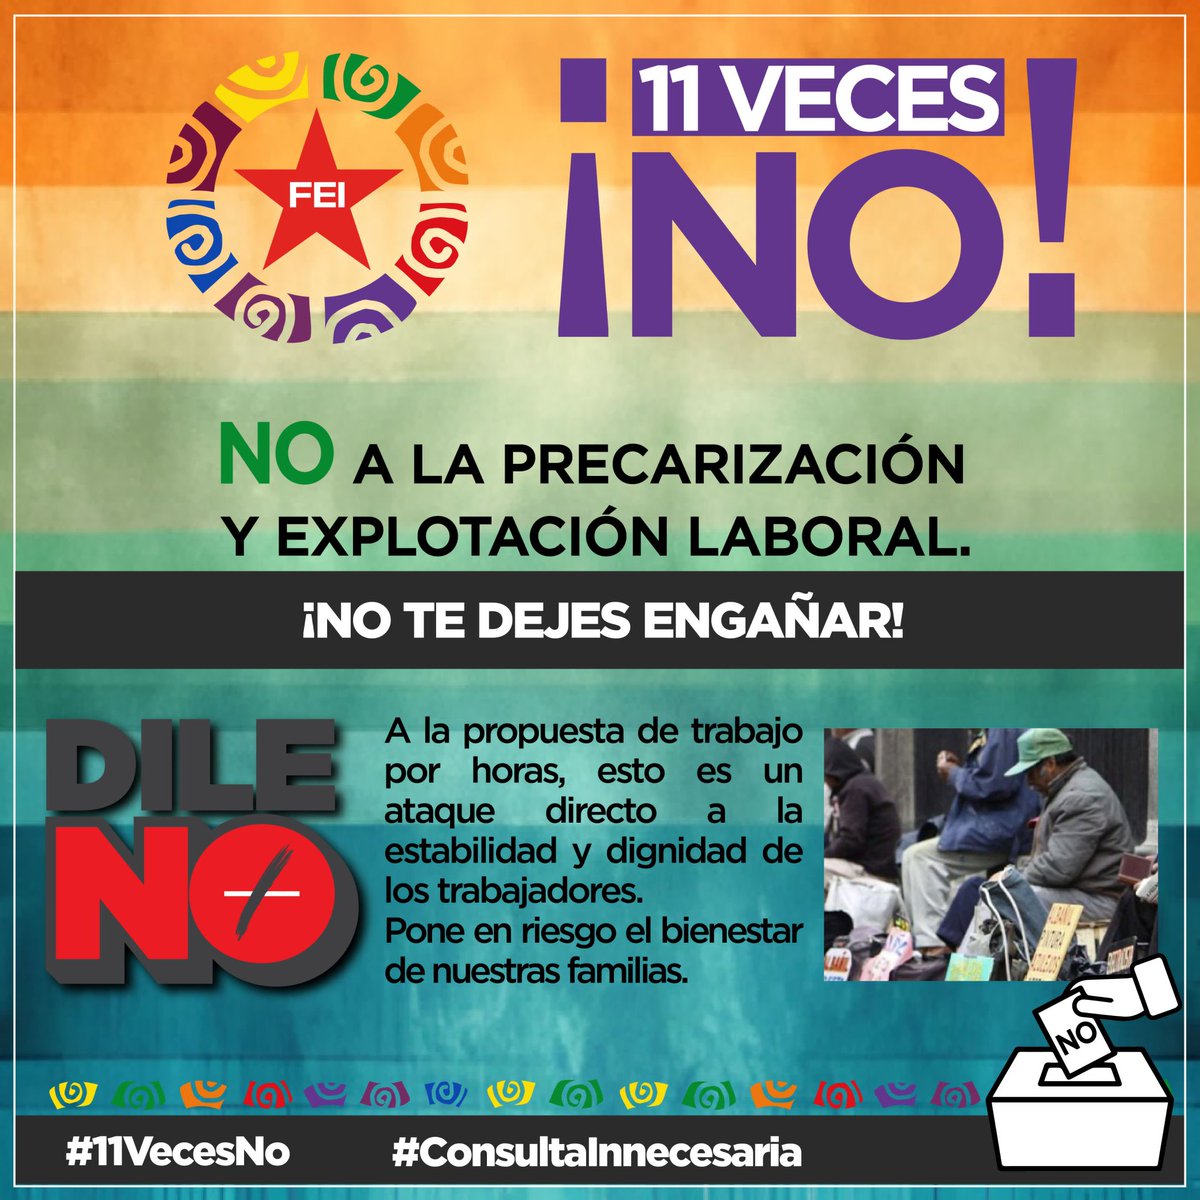 #NO a la Precarización y Explotación Laboral.

#notedejesengañar
#11VecesNoALaConsulta